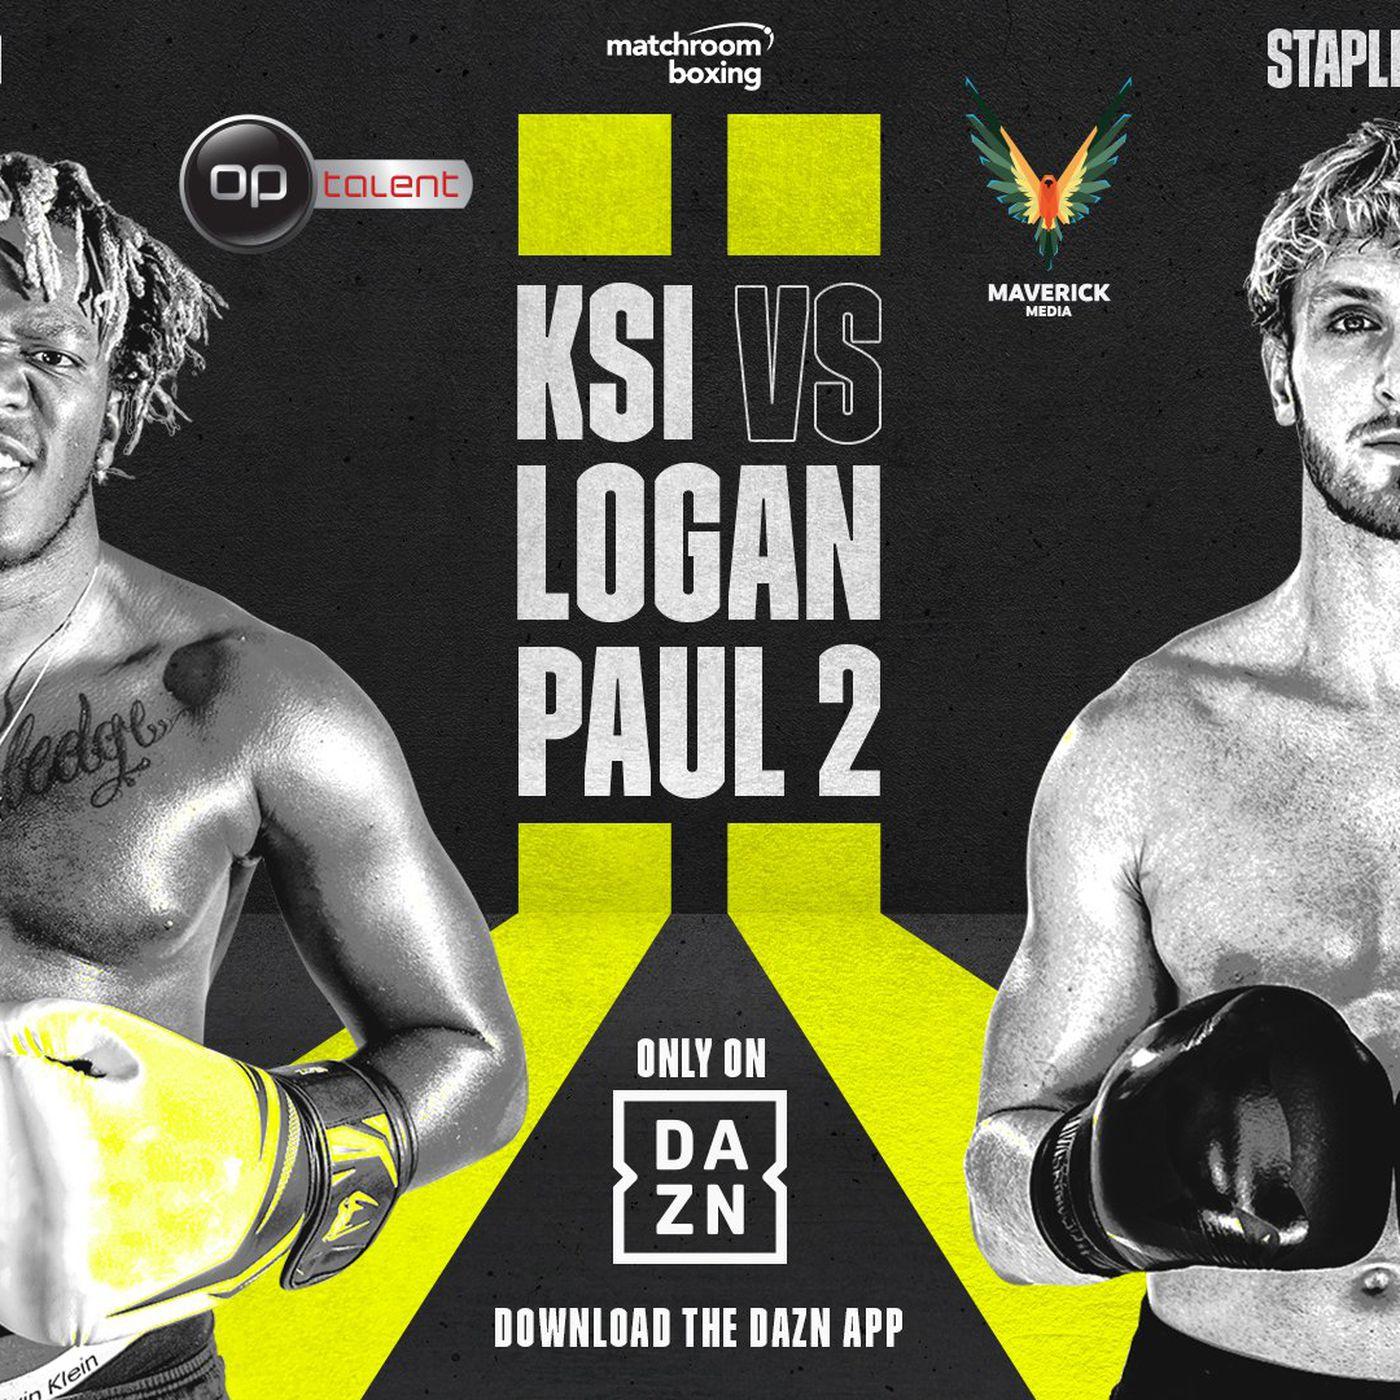 KSI Logan Paul Rematch Will Be Pro Fight On DAZN, Nov. 9